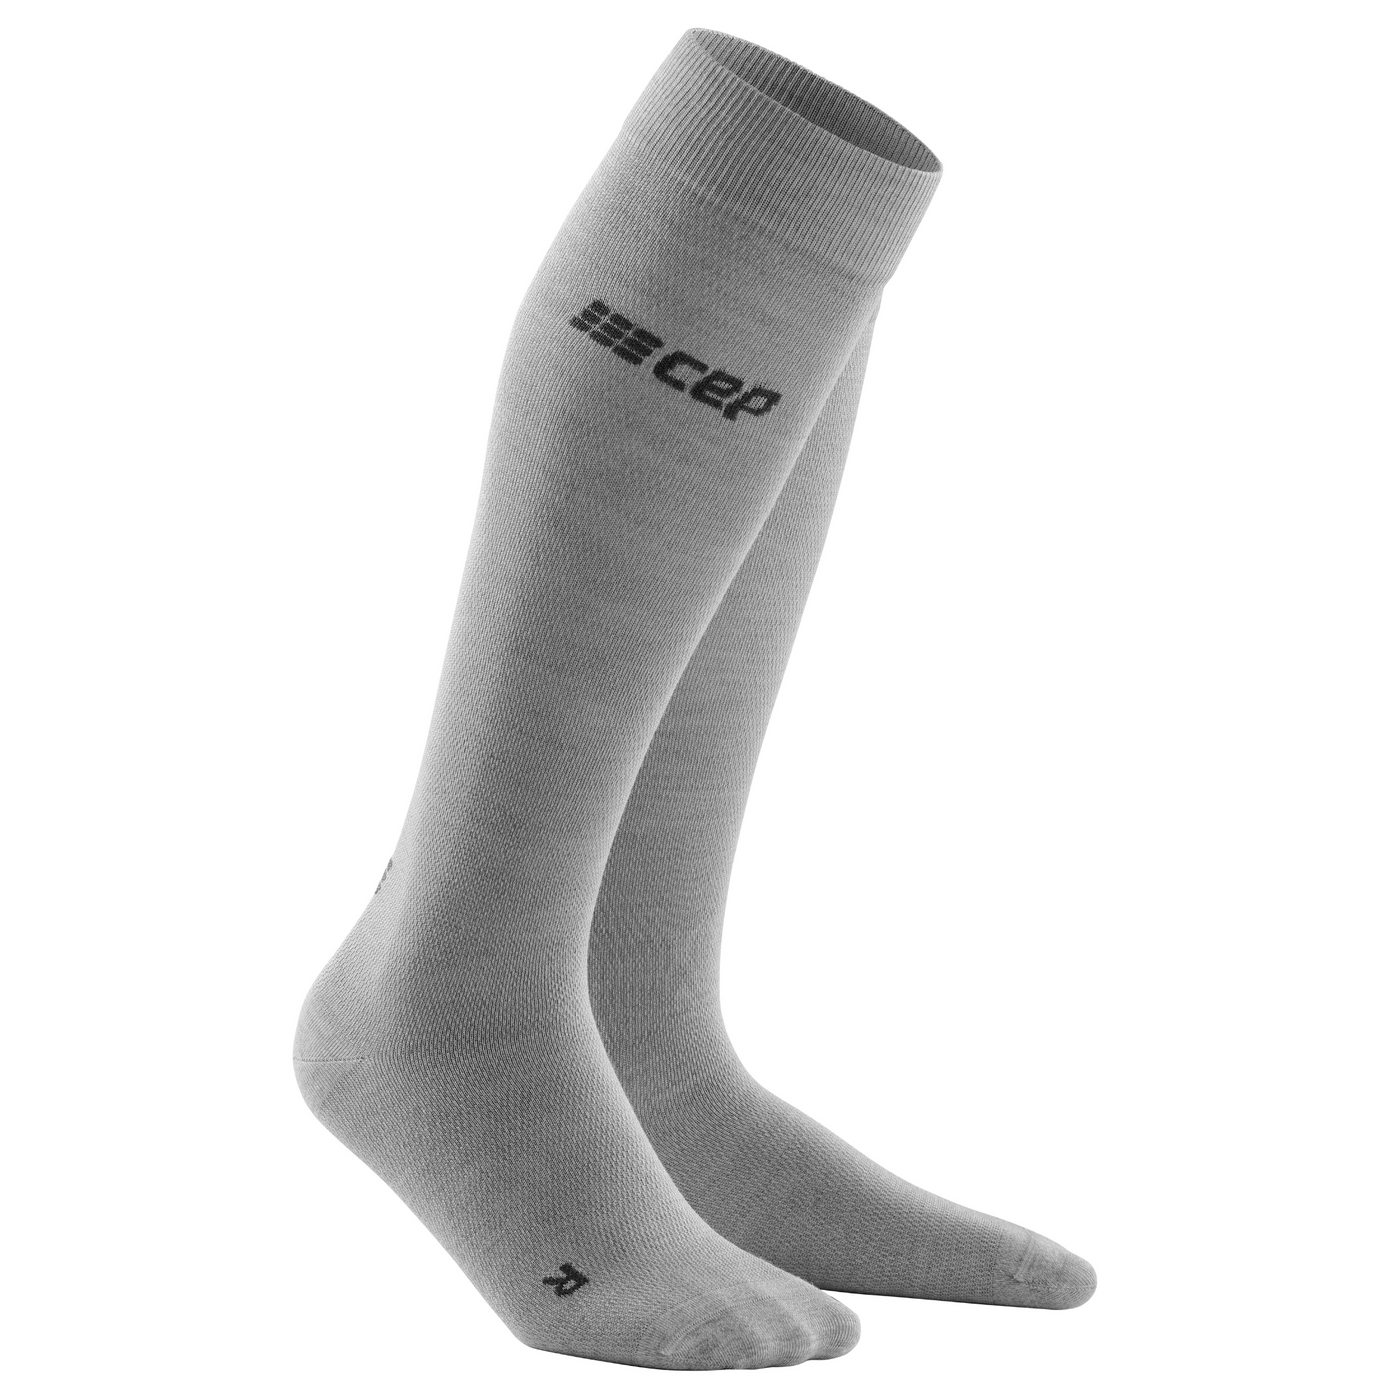 Allday Merino Tall Compression Socks, Men, Light Grey, Front View